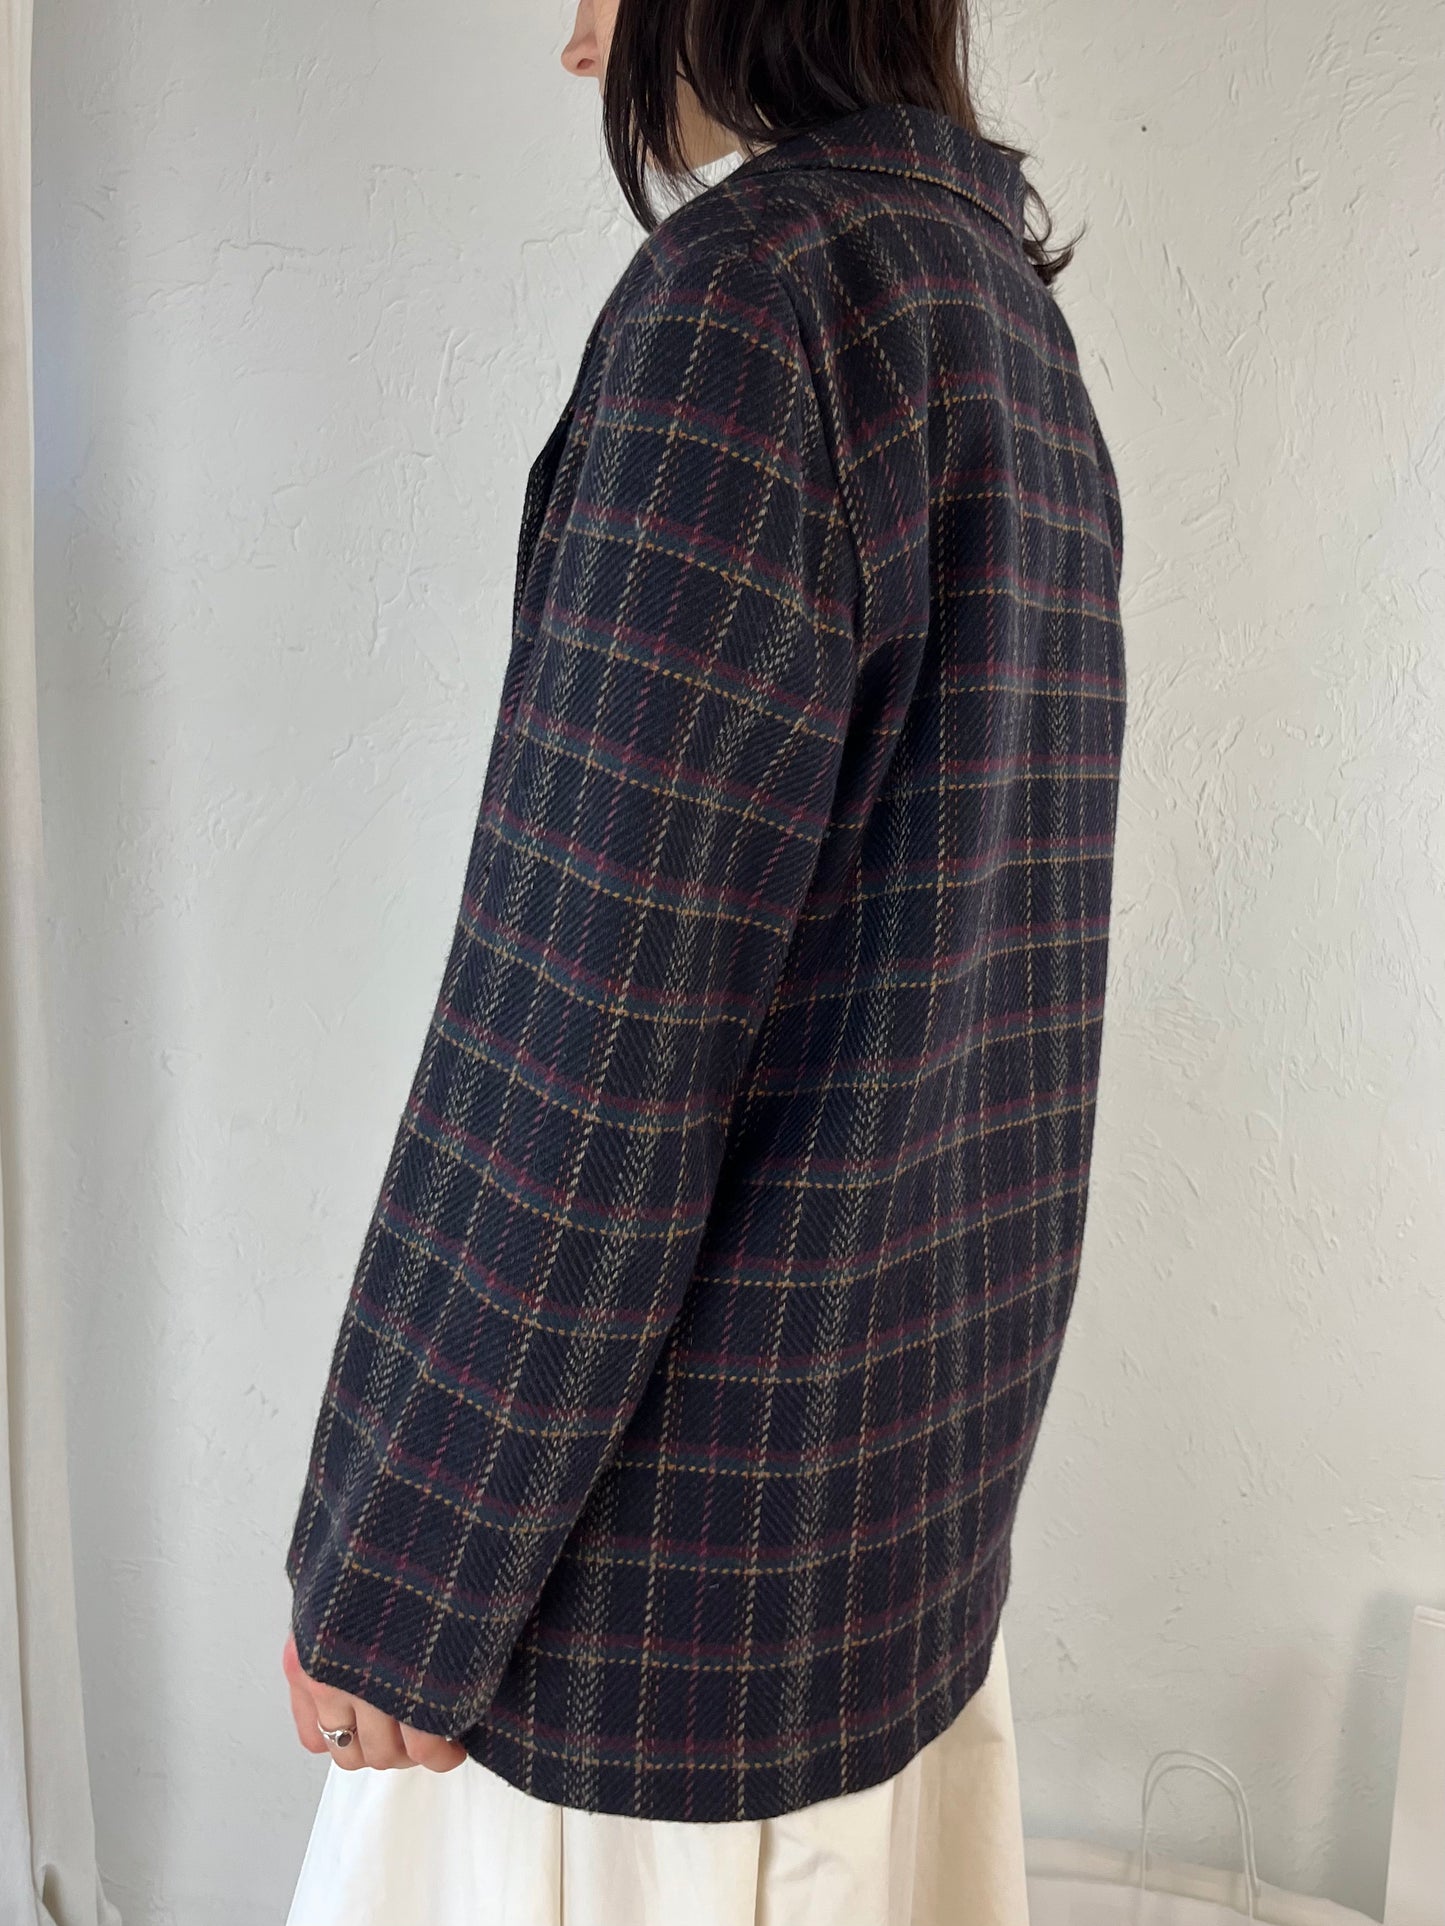 90s 'Alfred Dunner' Oversized Plaid Wool Blazer Jacket